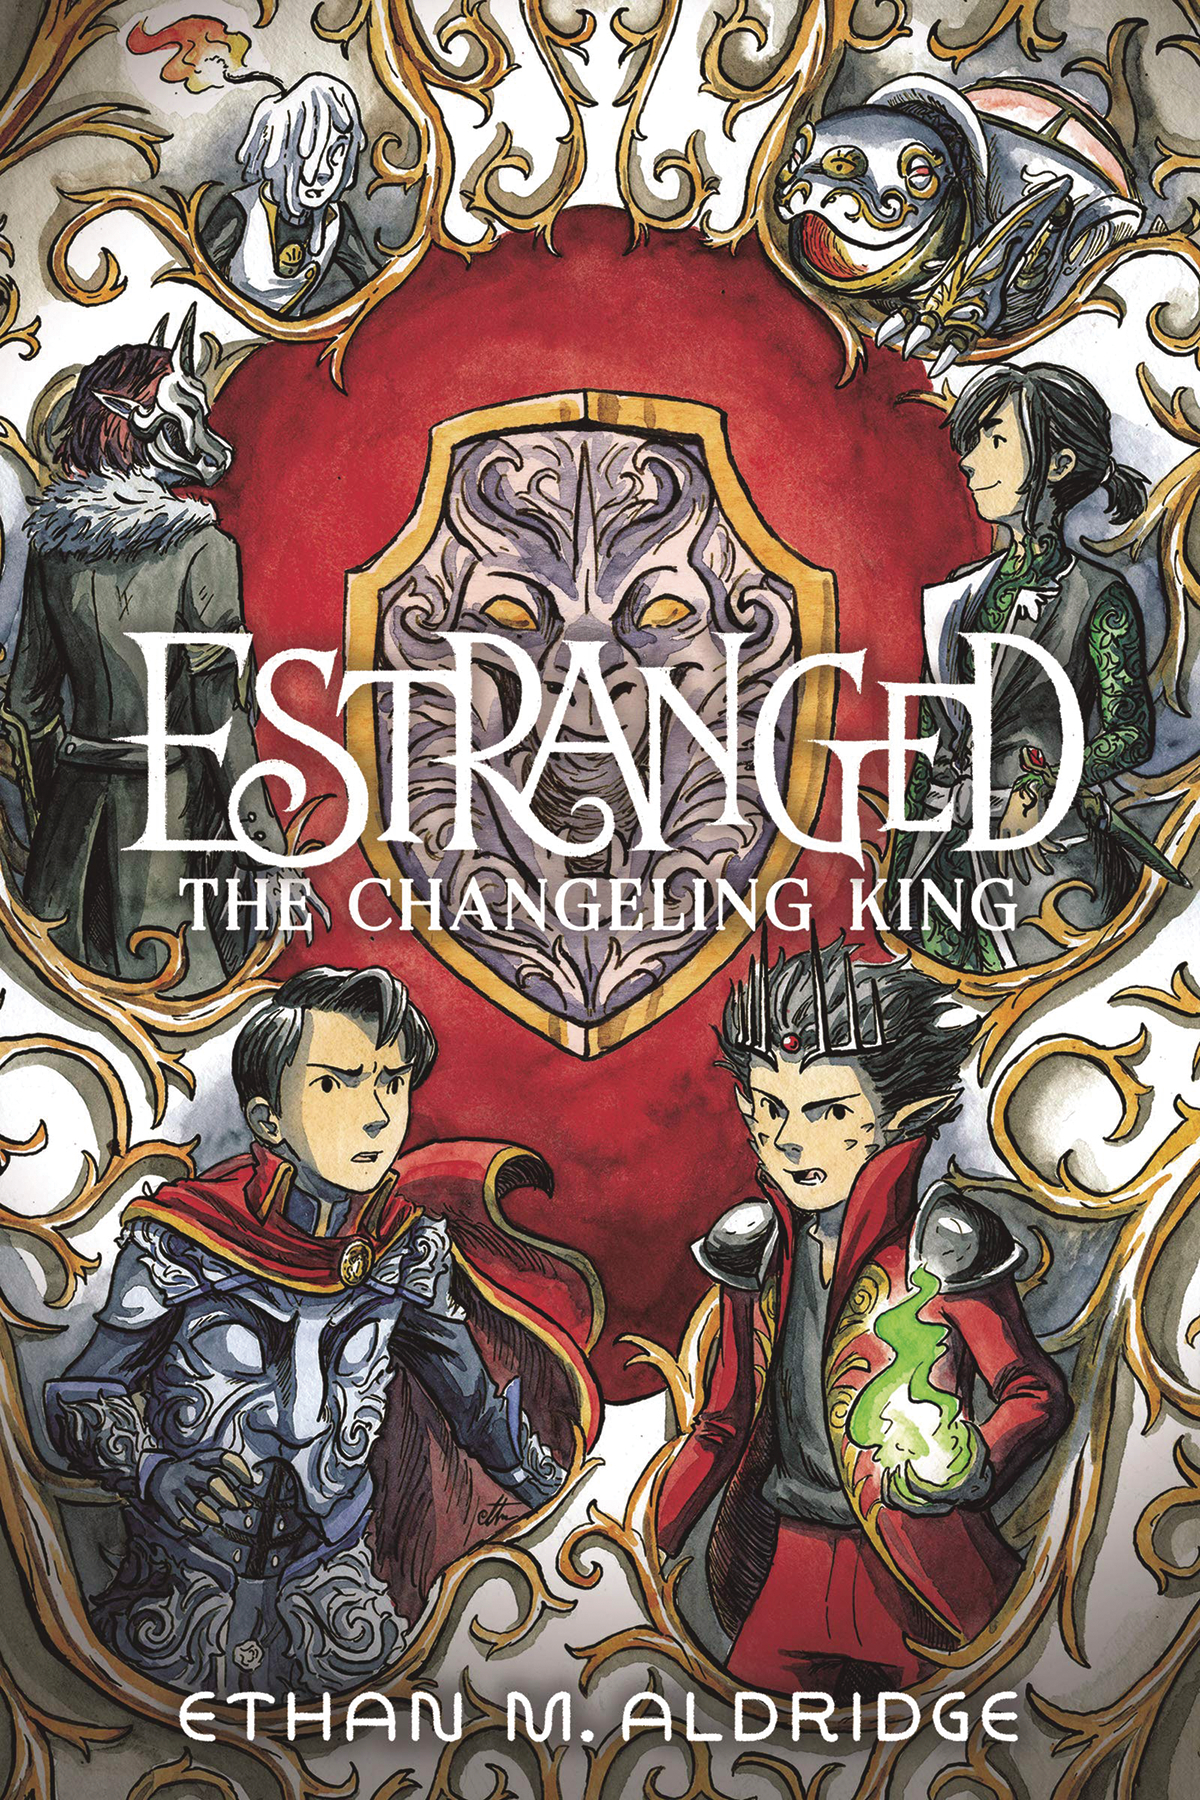 Estranged vol 2: The Changeling King s/c